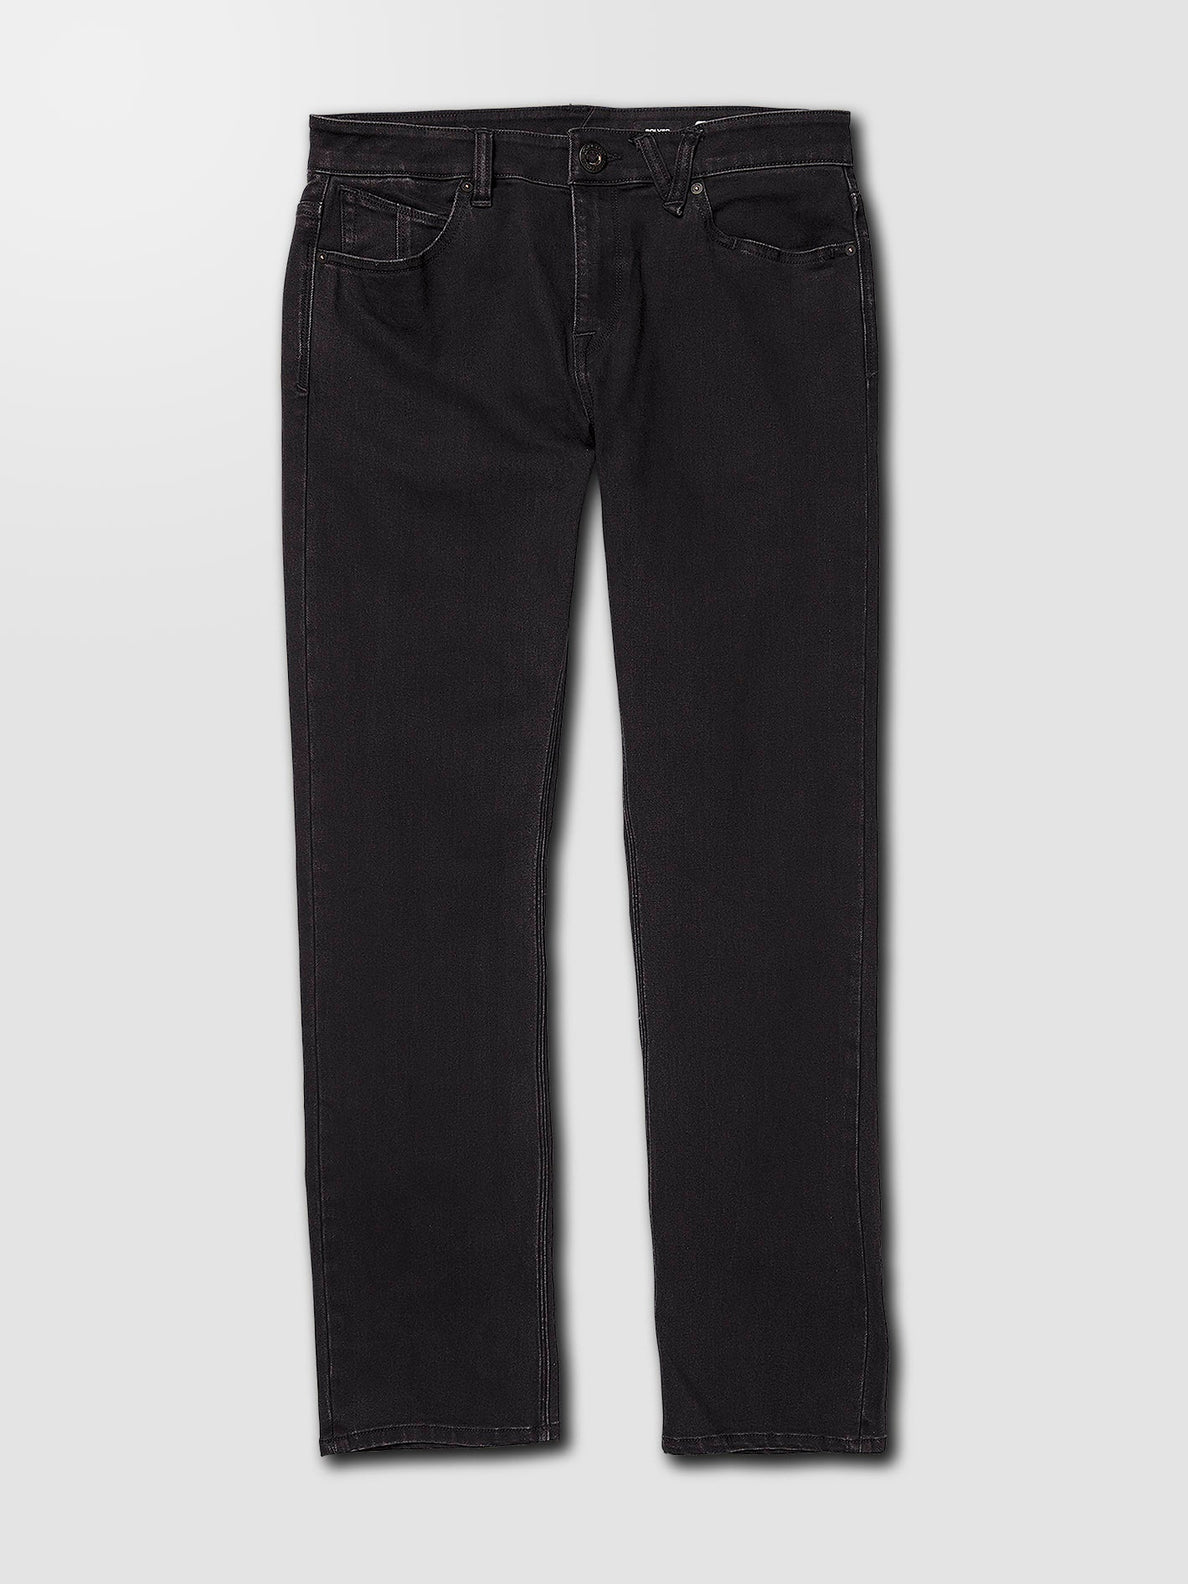 Solver Jeans - BLACK OUT (A1932204_BKOB) [8]